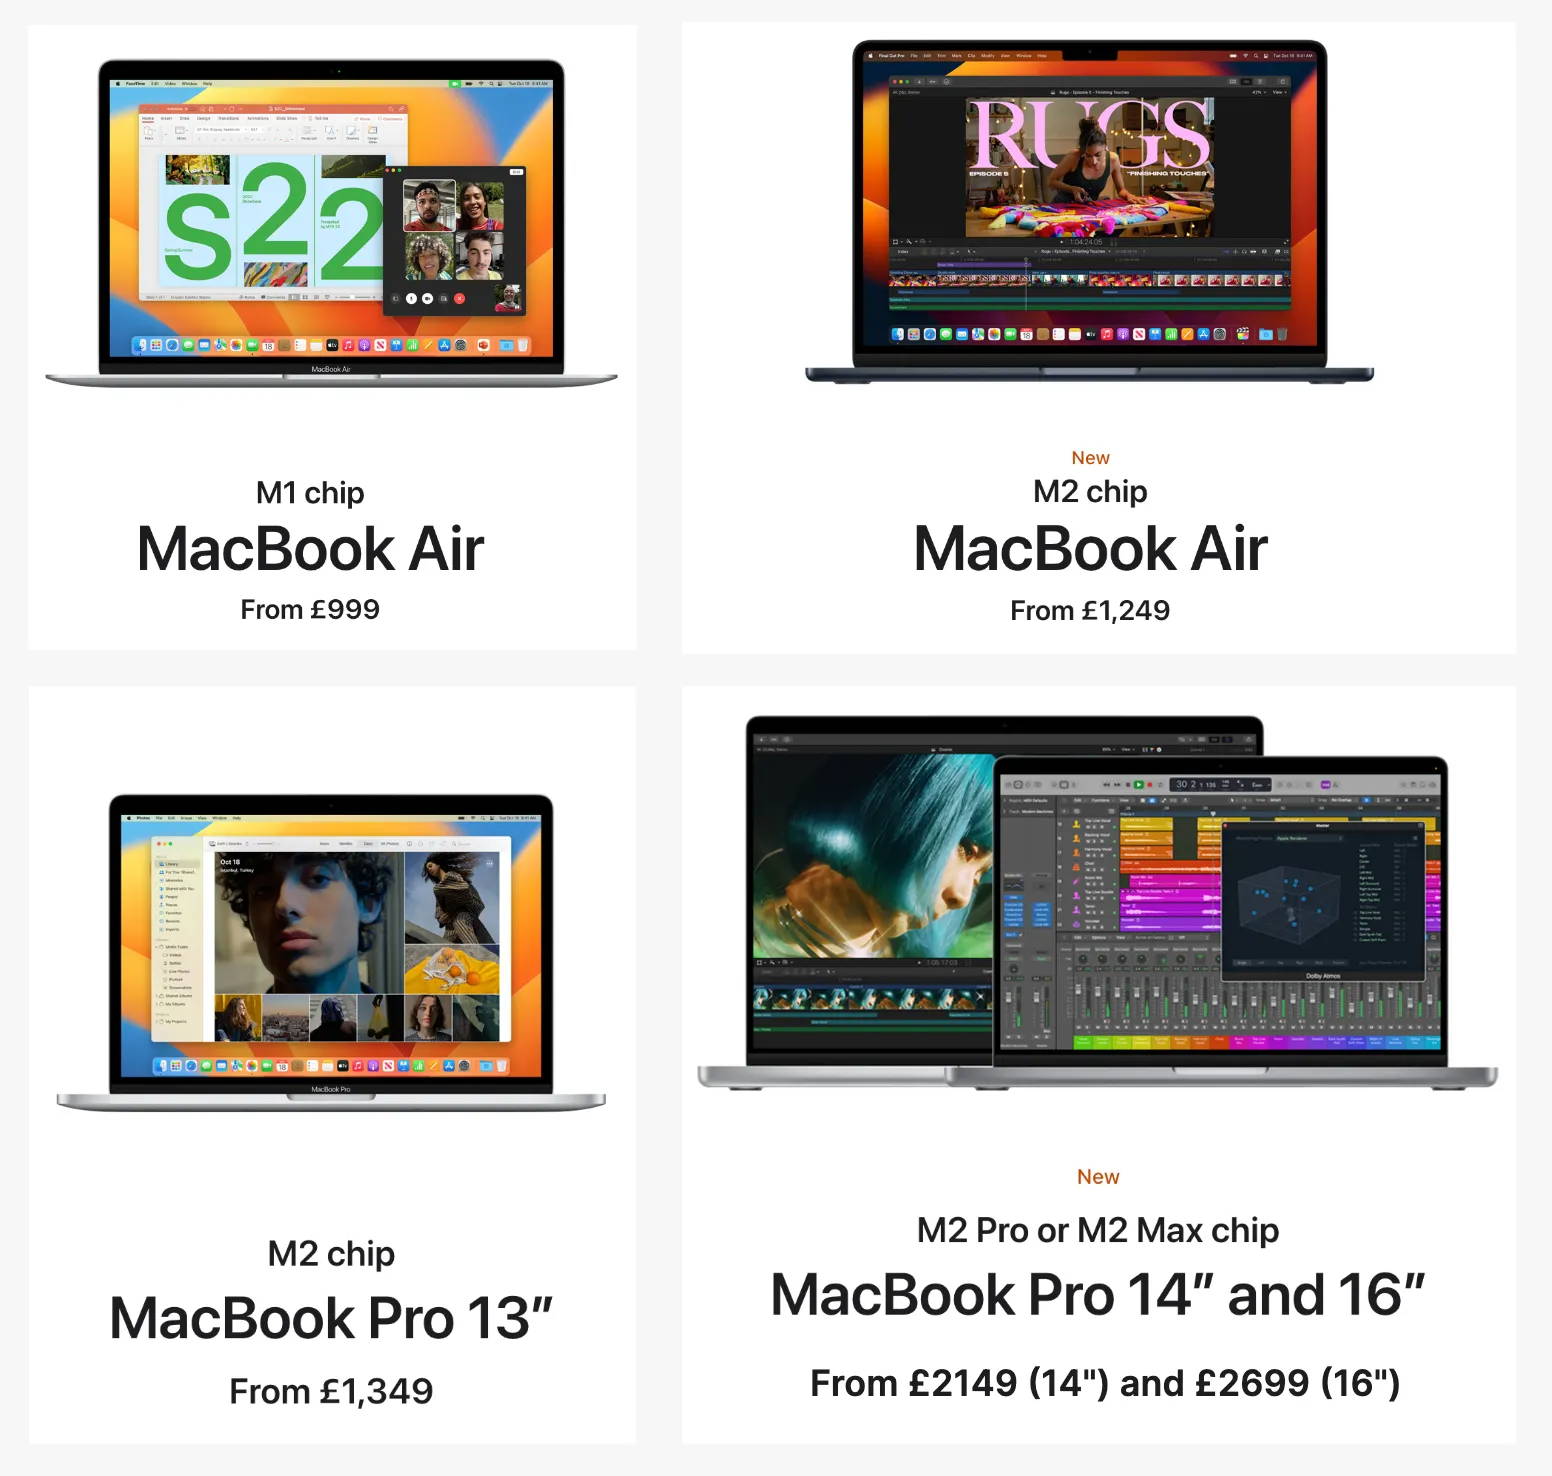 MacBook pricing